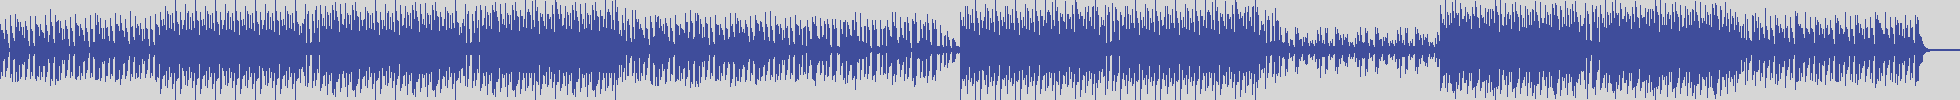 nf_boyz_records [NFY027] Tony Cox - Some Fun Tonight [Vocal Mix] audio wave form